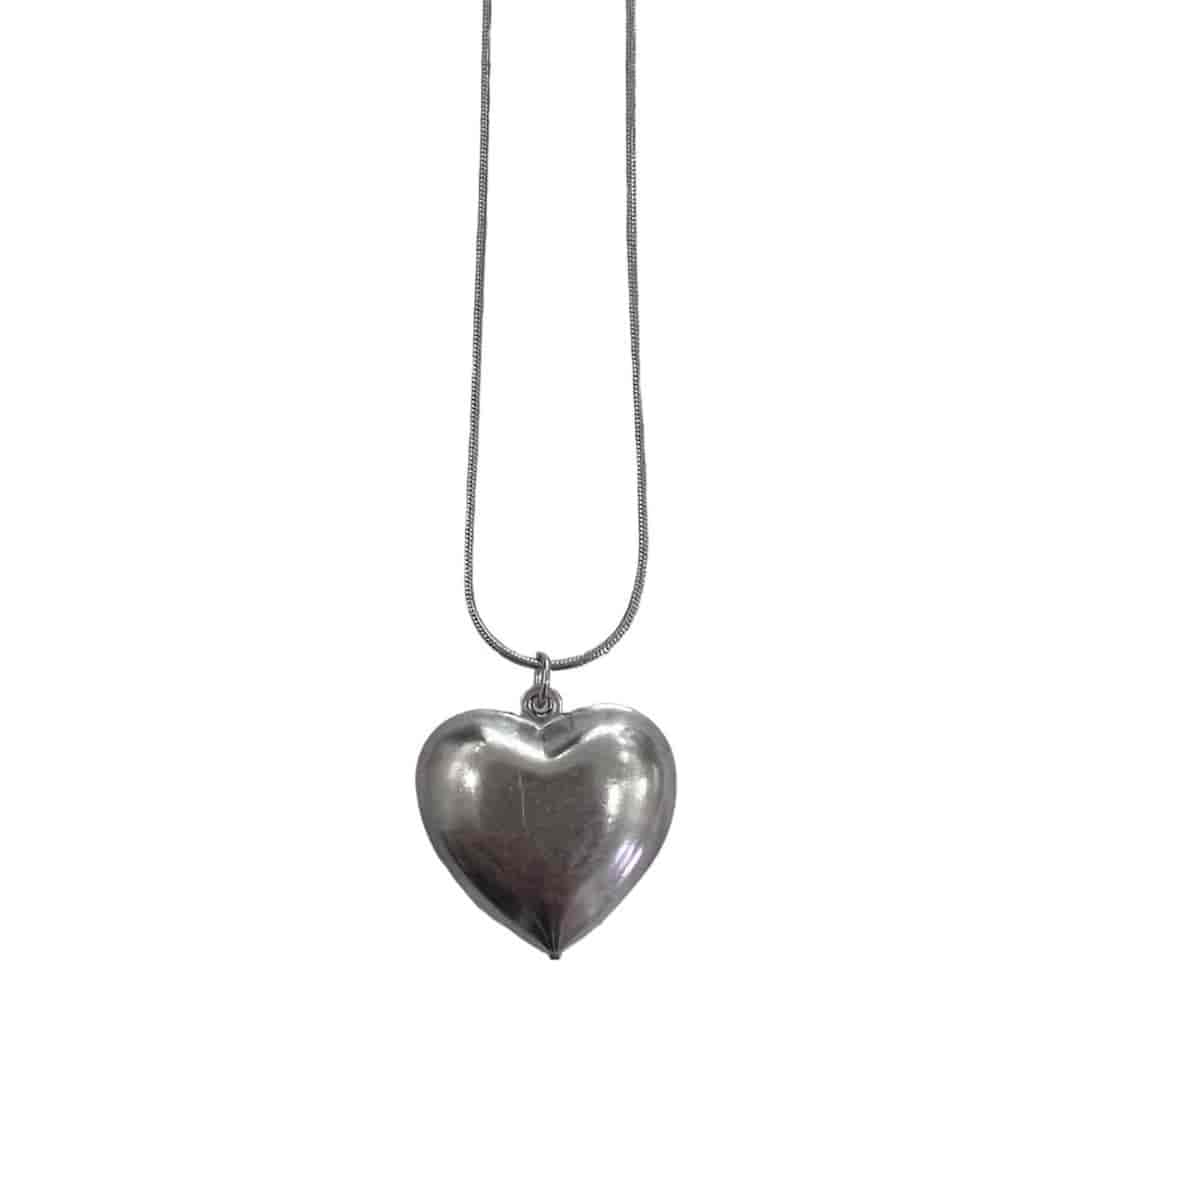 NST2-1194 Ατσάλινη ασημί ματ καρδιά μενταγιόν σε αλυσίδα